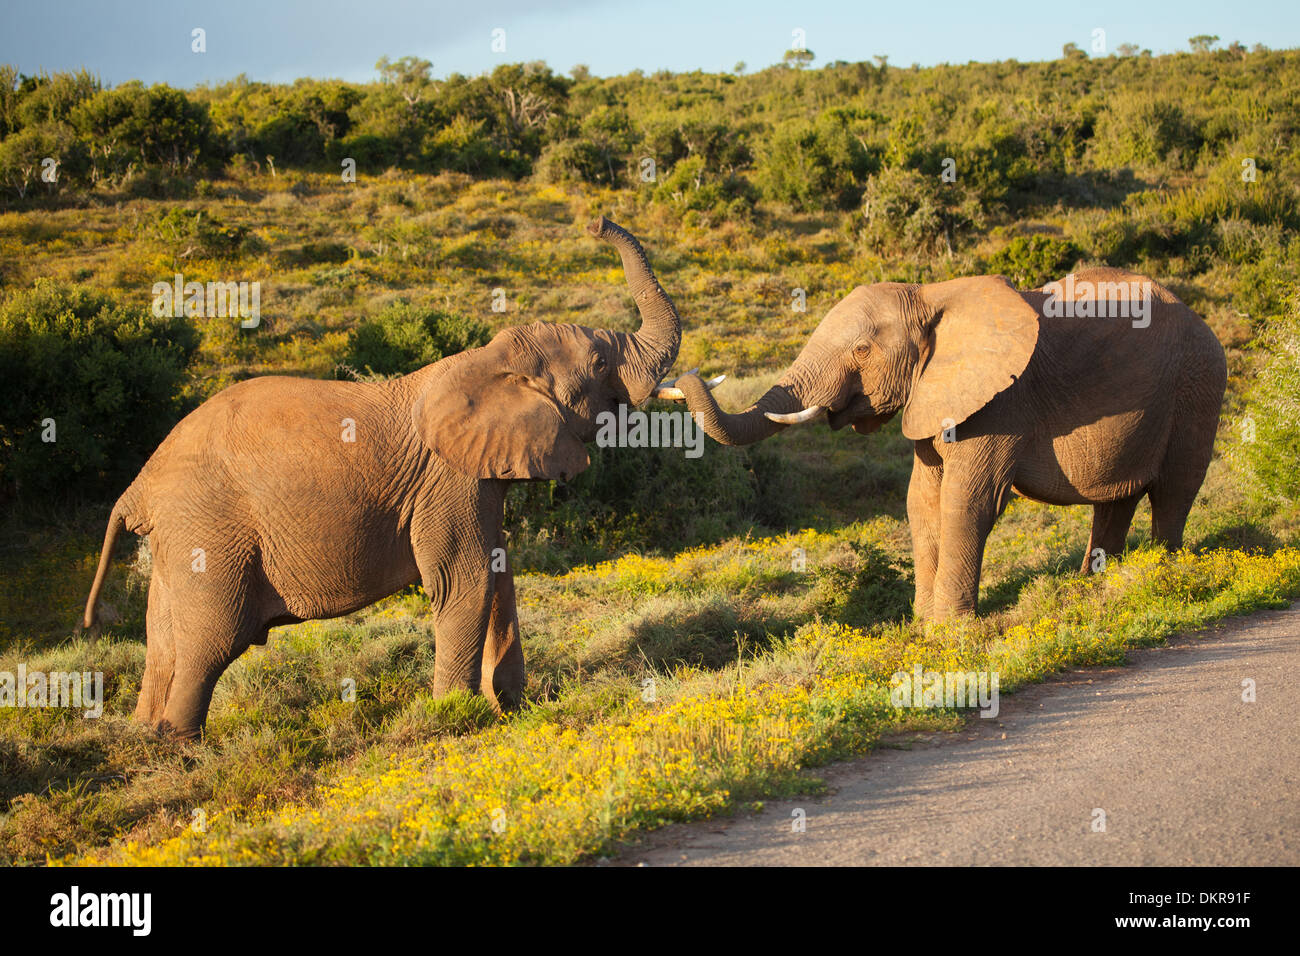 Fighting, Elephants, Addo Elephant, National Park, South Africa, Africa, animals Stock Photo